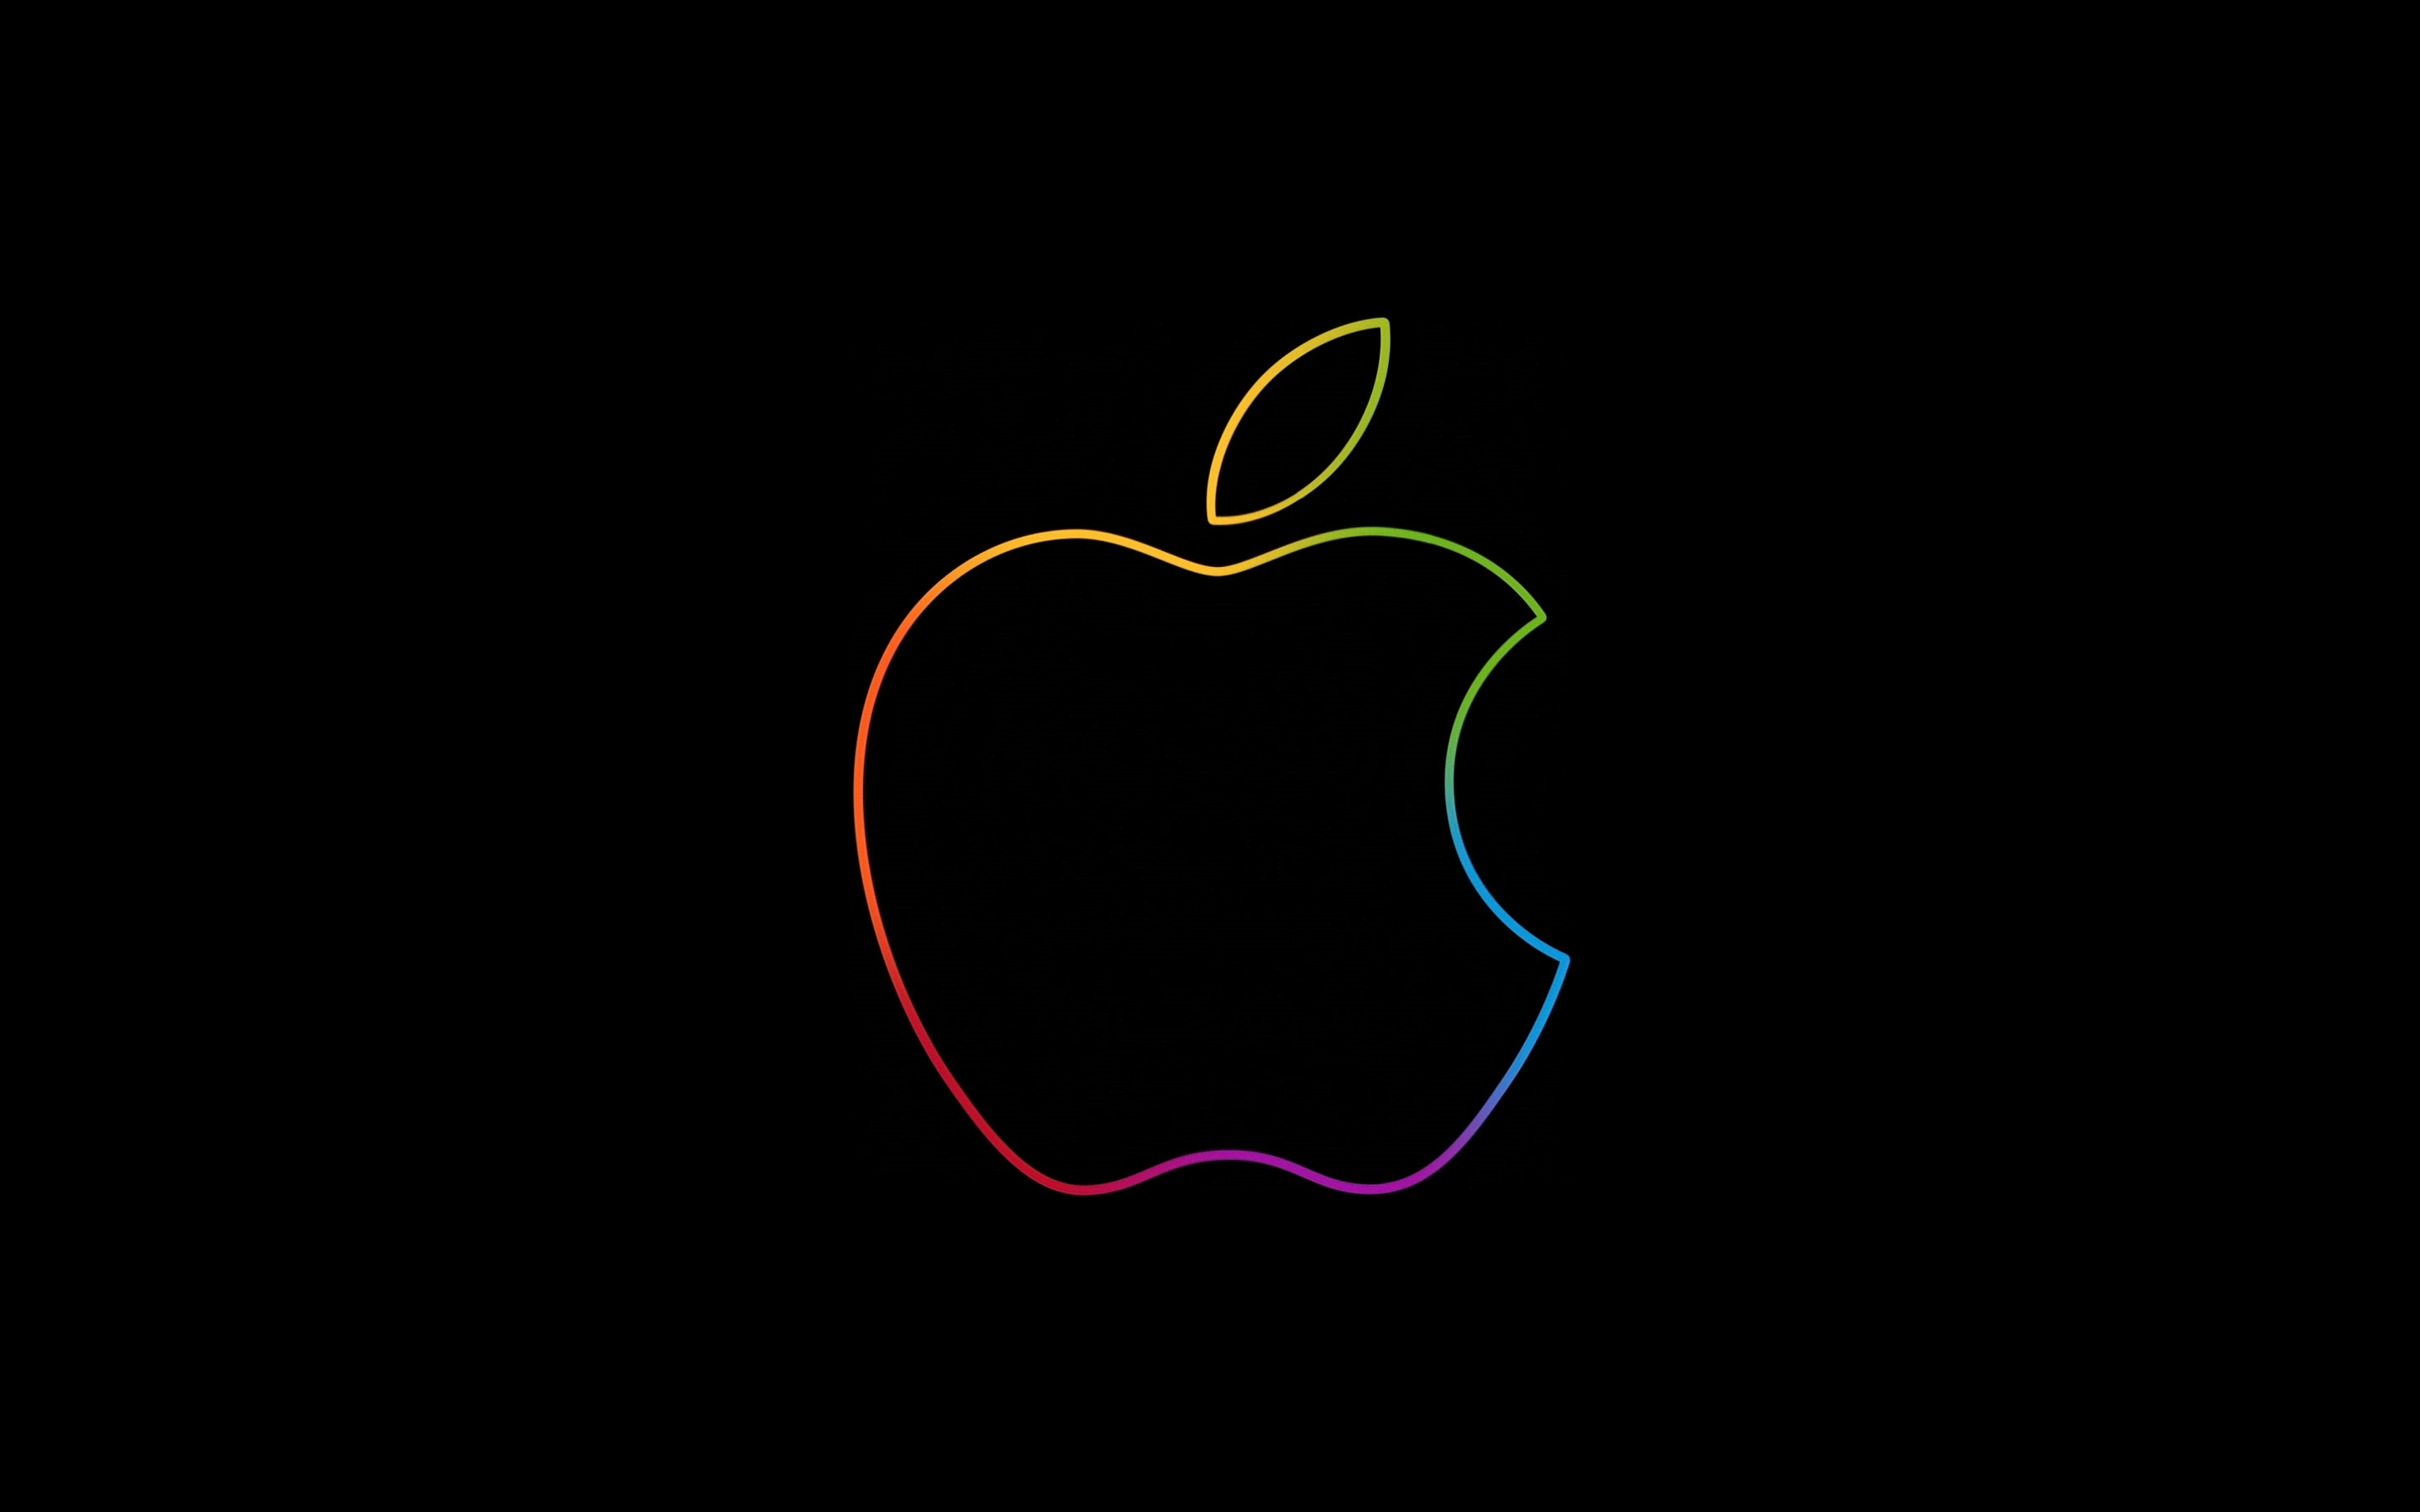 The famous Apple logo wallpaper 2880x1800